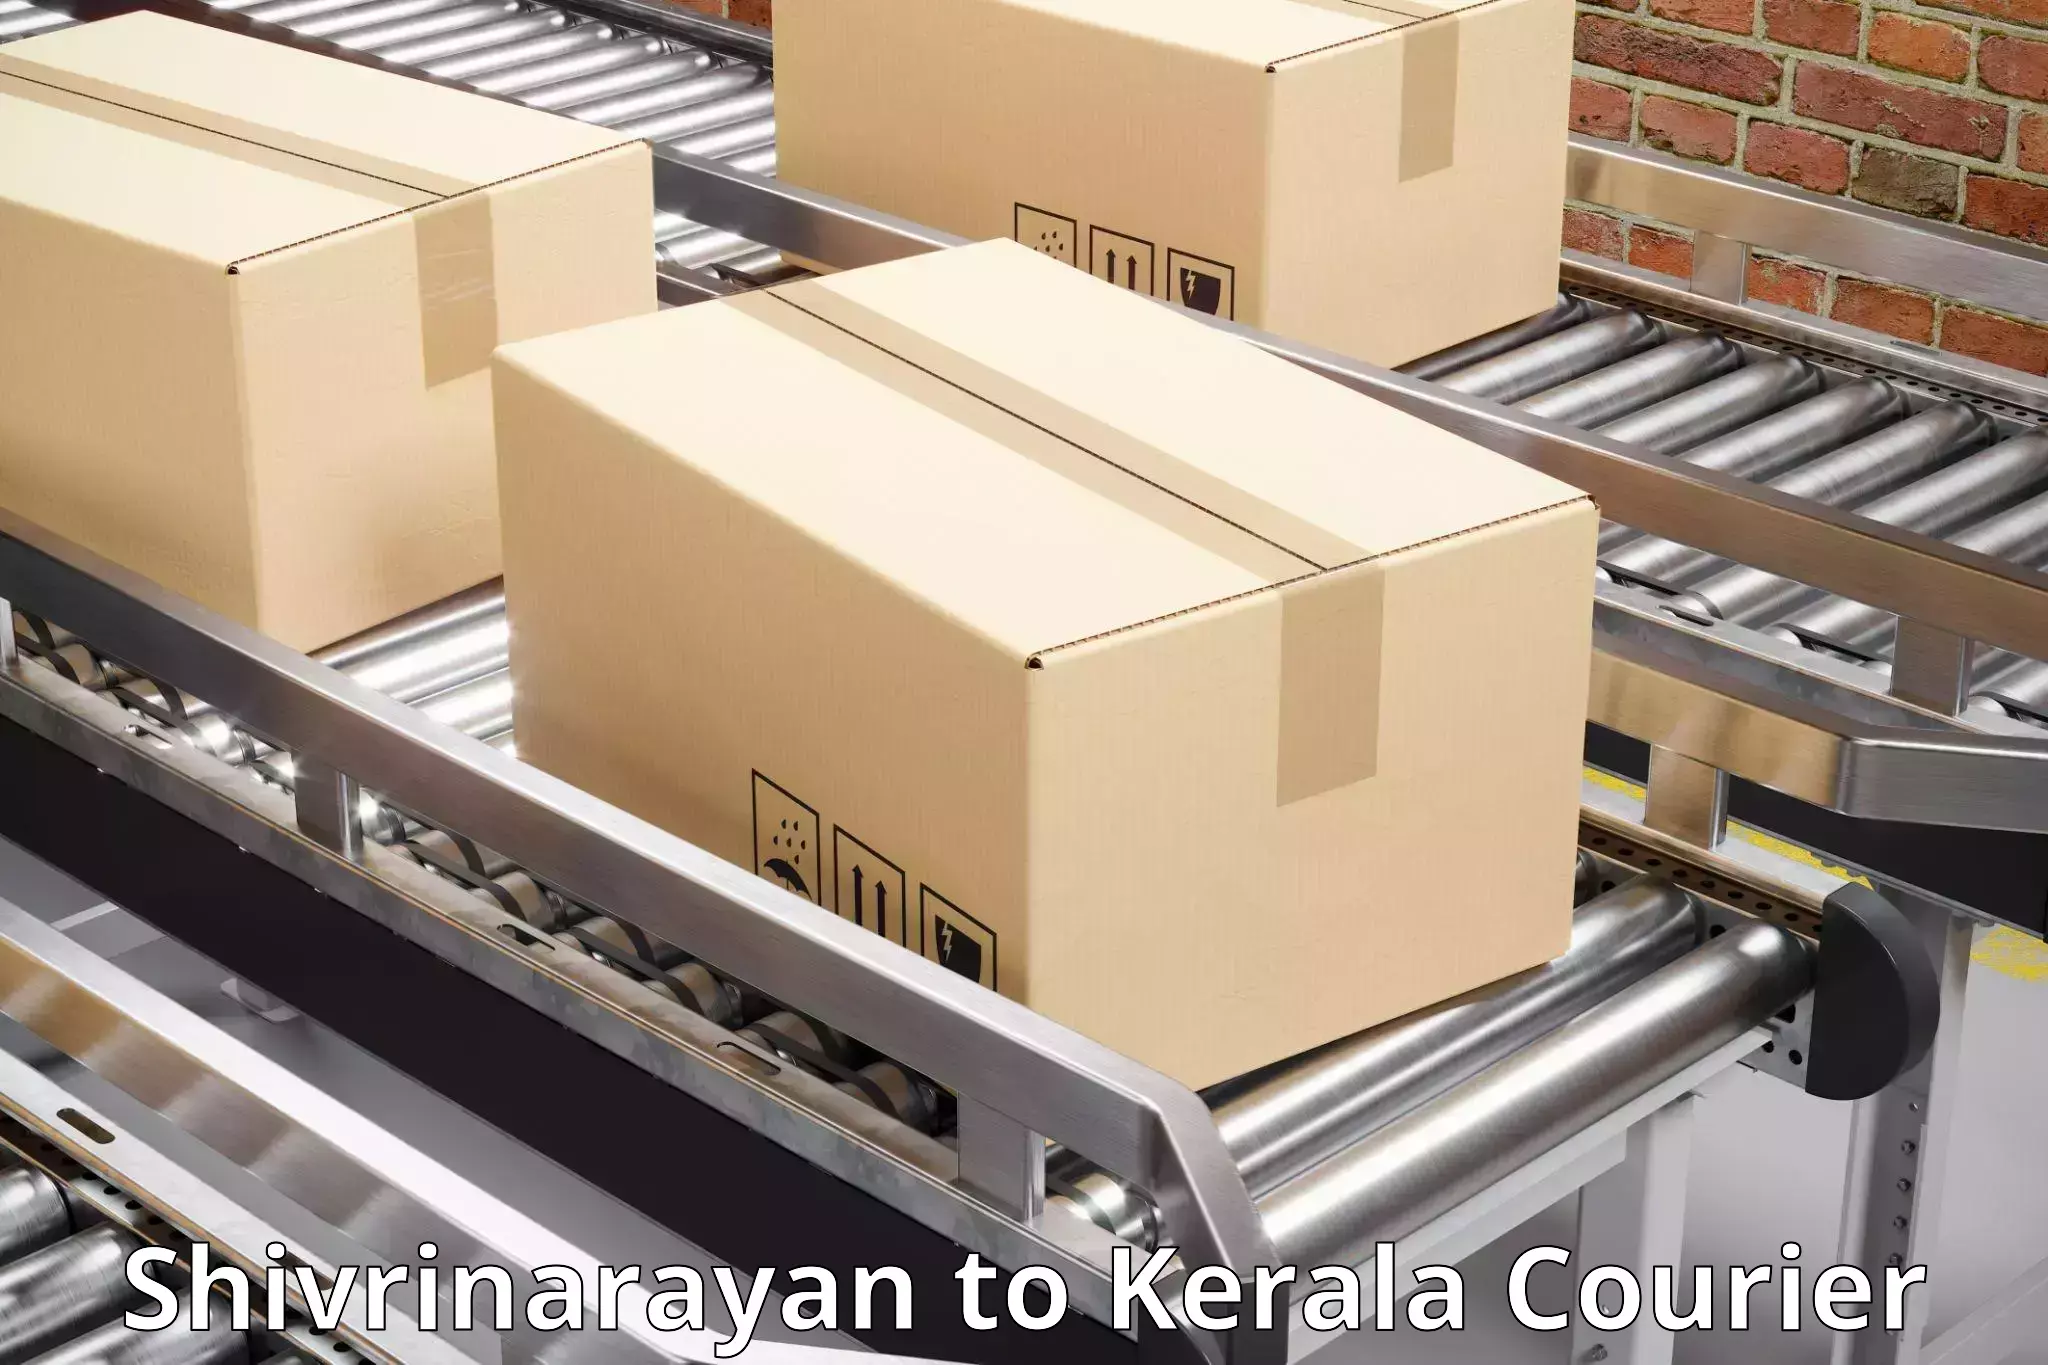 Full-service courier options Shivrinarayan to Nileshwar